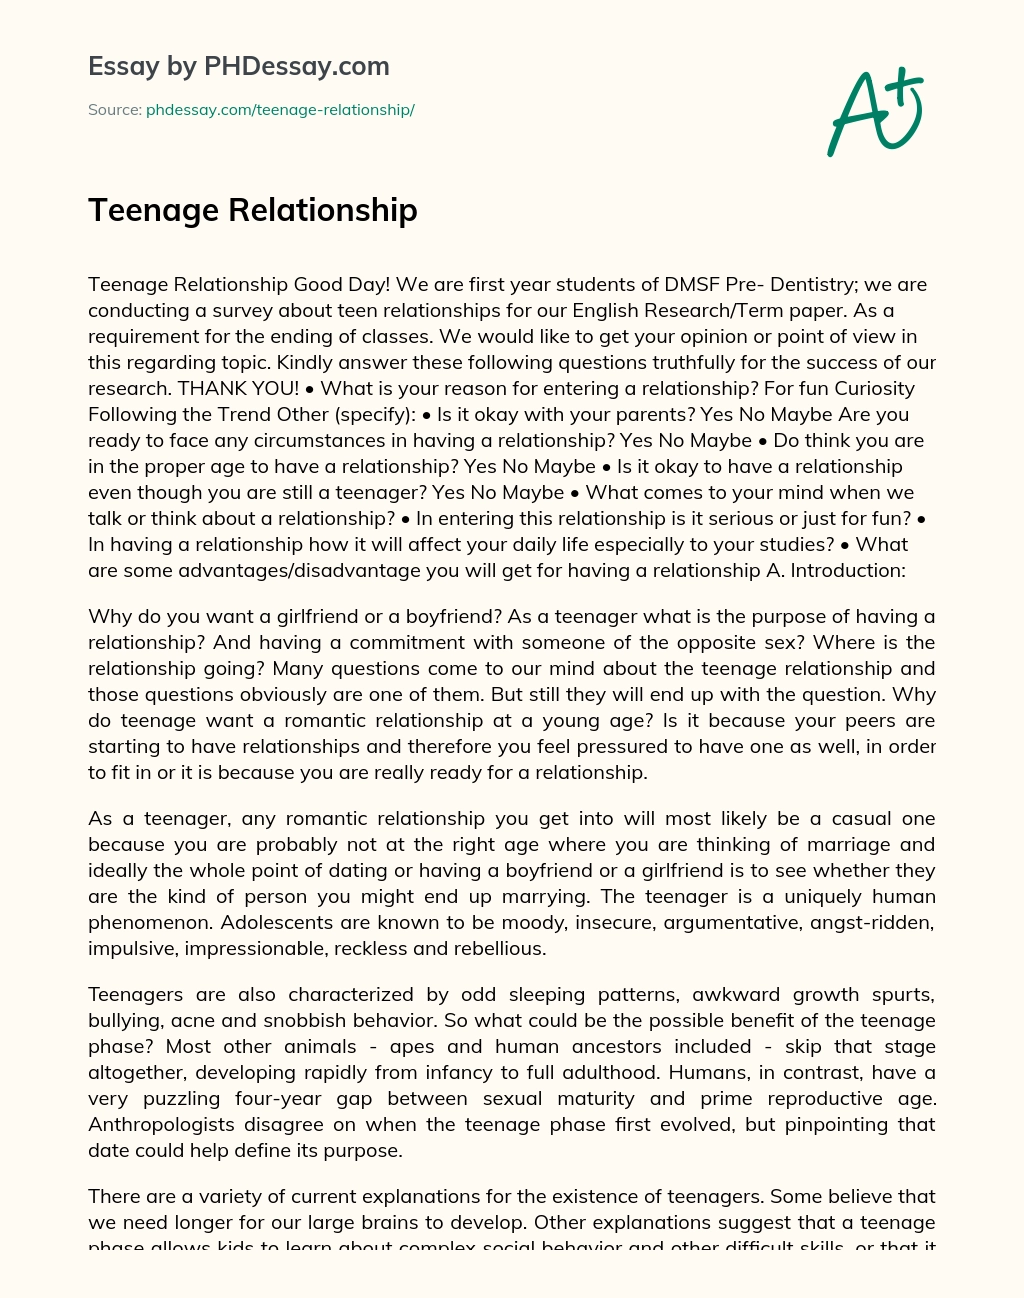 Teenage Relationship essay